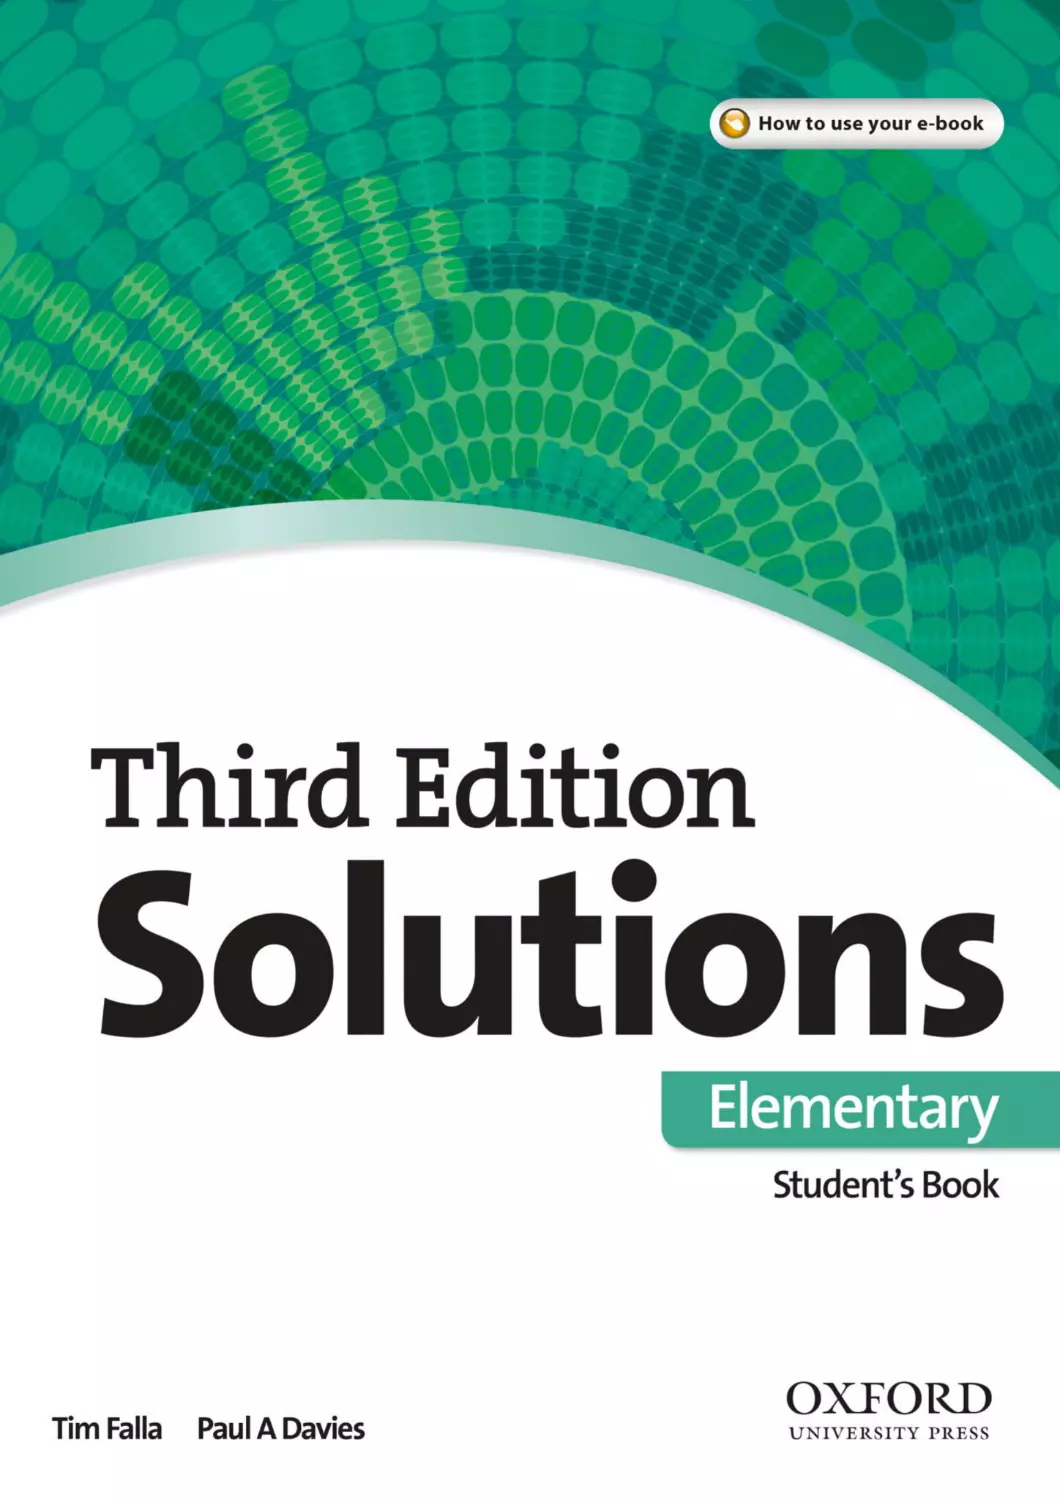 Solutions elementary book ответы. Solutions Elementary 3rd Edition. Солюшнс элементари 3 издание. Solutions Elementary 3rd Edition Workbook. Учебник third Edition solutions Elementary.